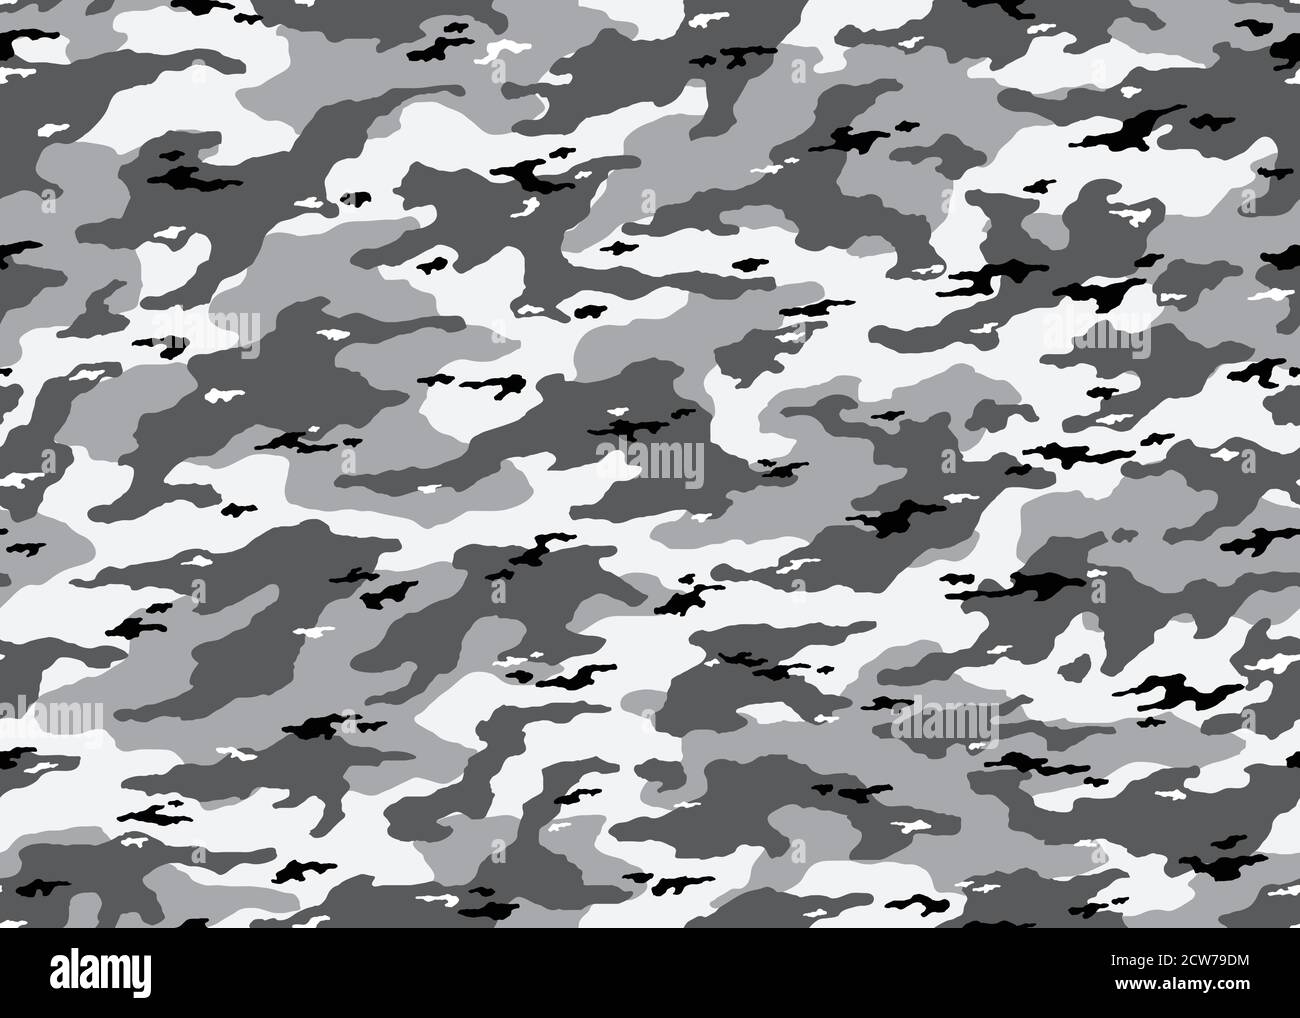 https://c8.alamy.com/comp/2CW79DM/modern-grey-camouflage-seamless-pattern-camo-vector-background-illustration-for-web-banner-backdrop-or-surface-design-use-2CW79DM.jpg